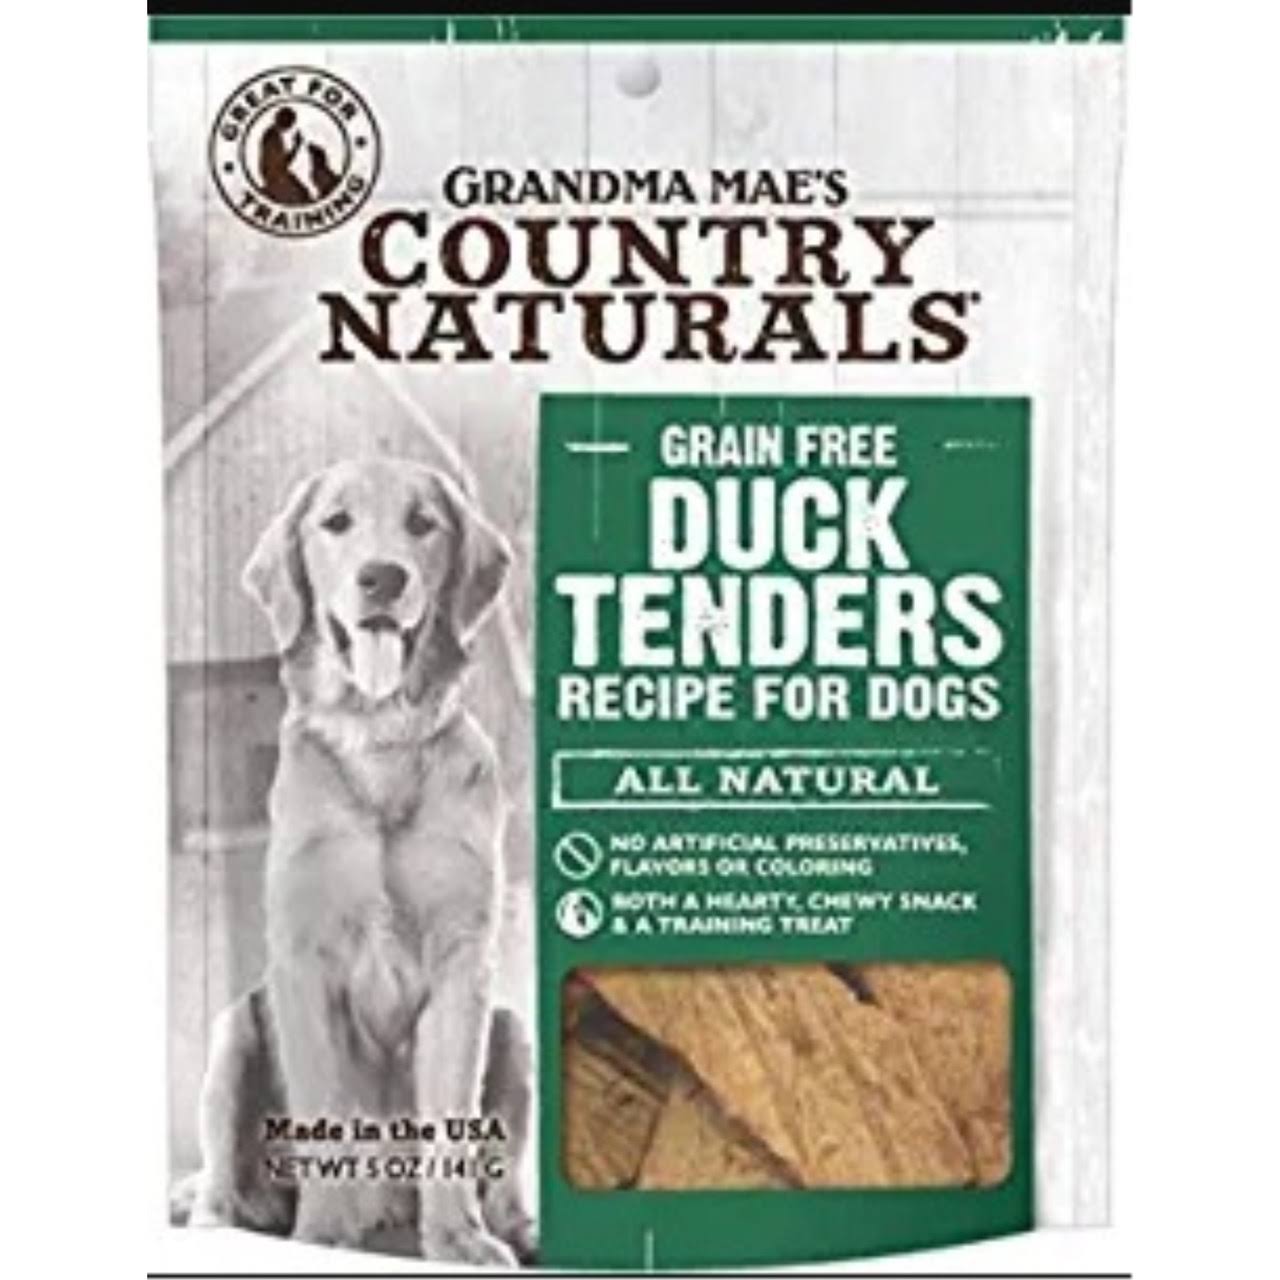 Grandma Mae's Country Naturals Dog Treats-Duck Tenders